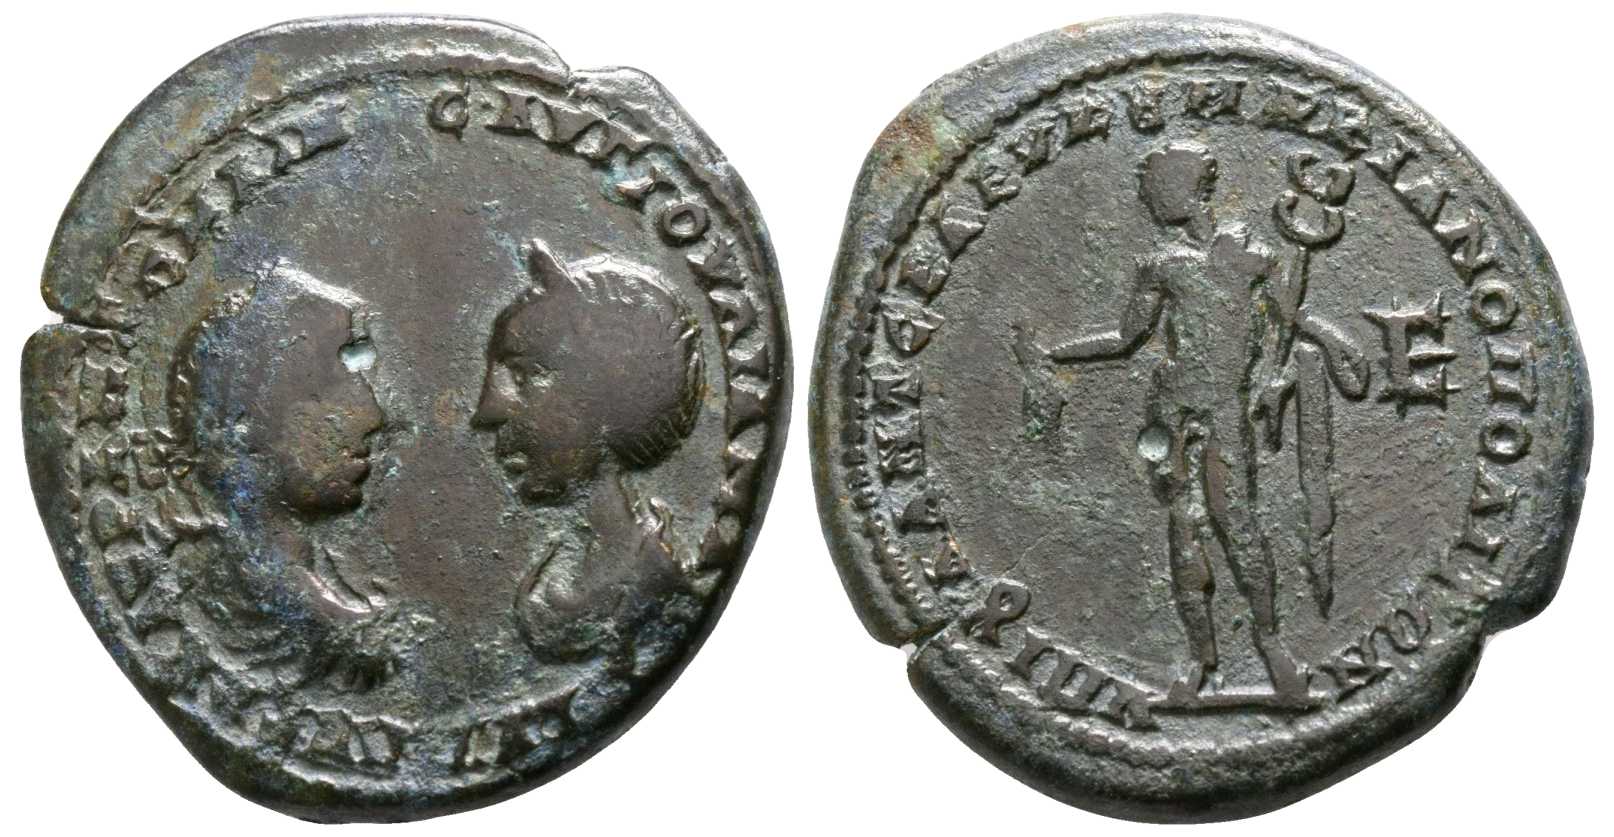 6705 Marcianopolis Moesia Inferior Elagabalus & Iulia Maesa AE